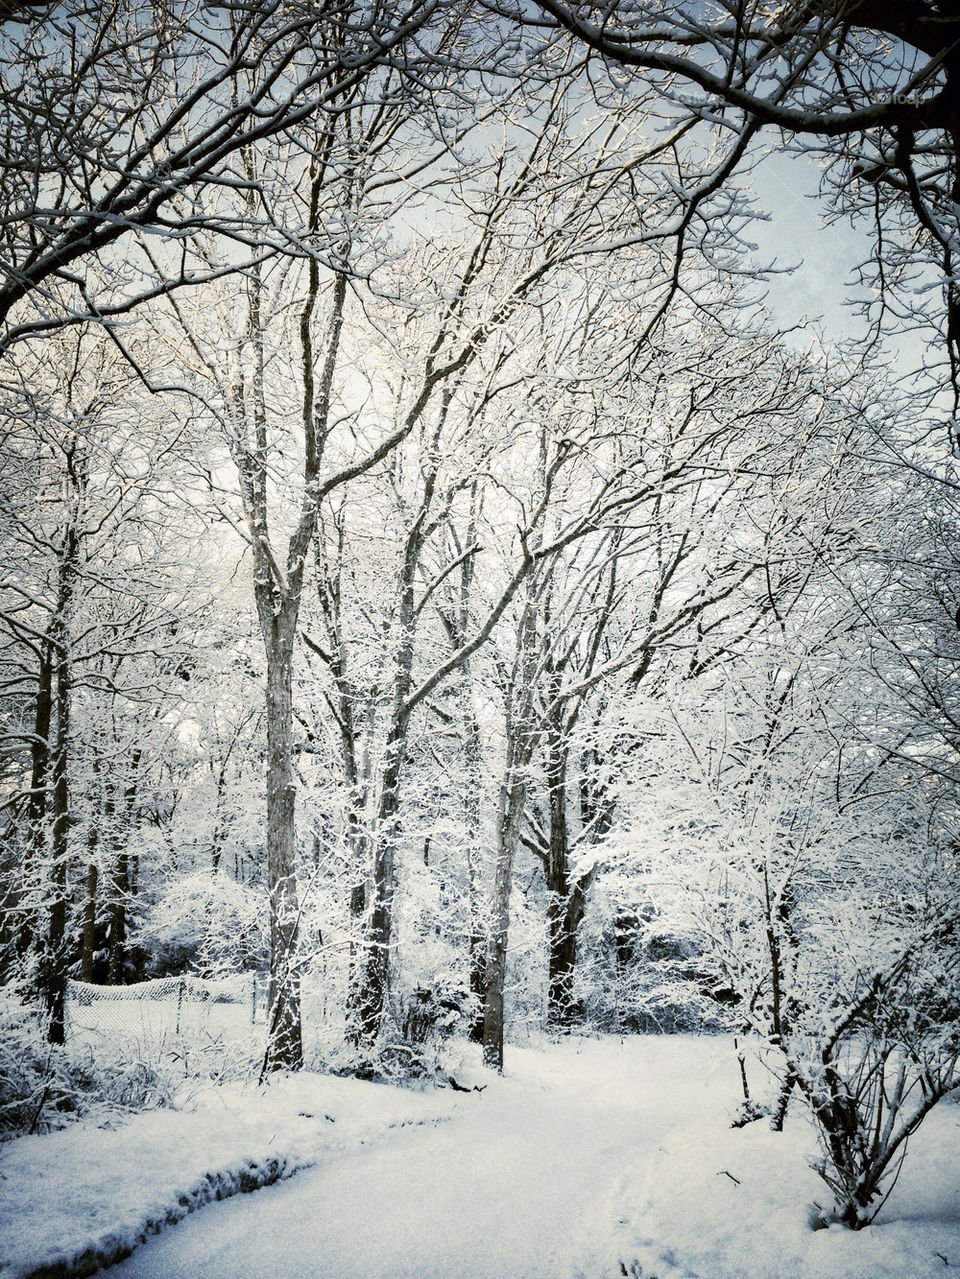 Snow cover like powdered sugar. Natures magic.